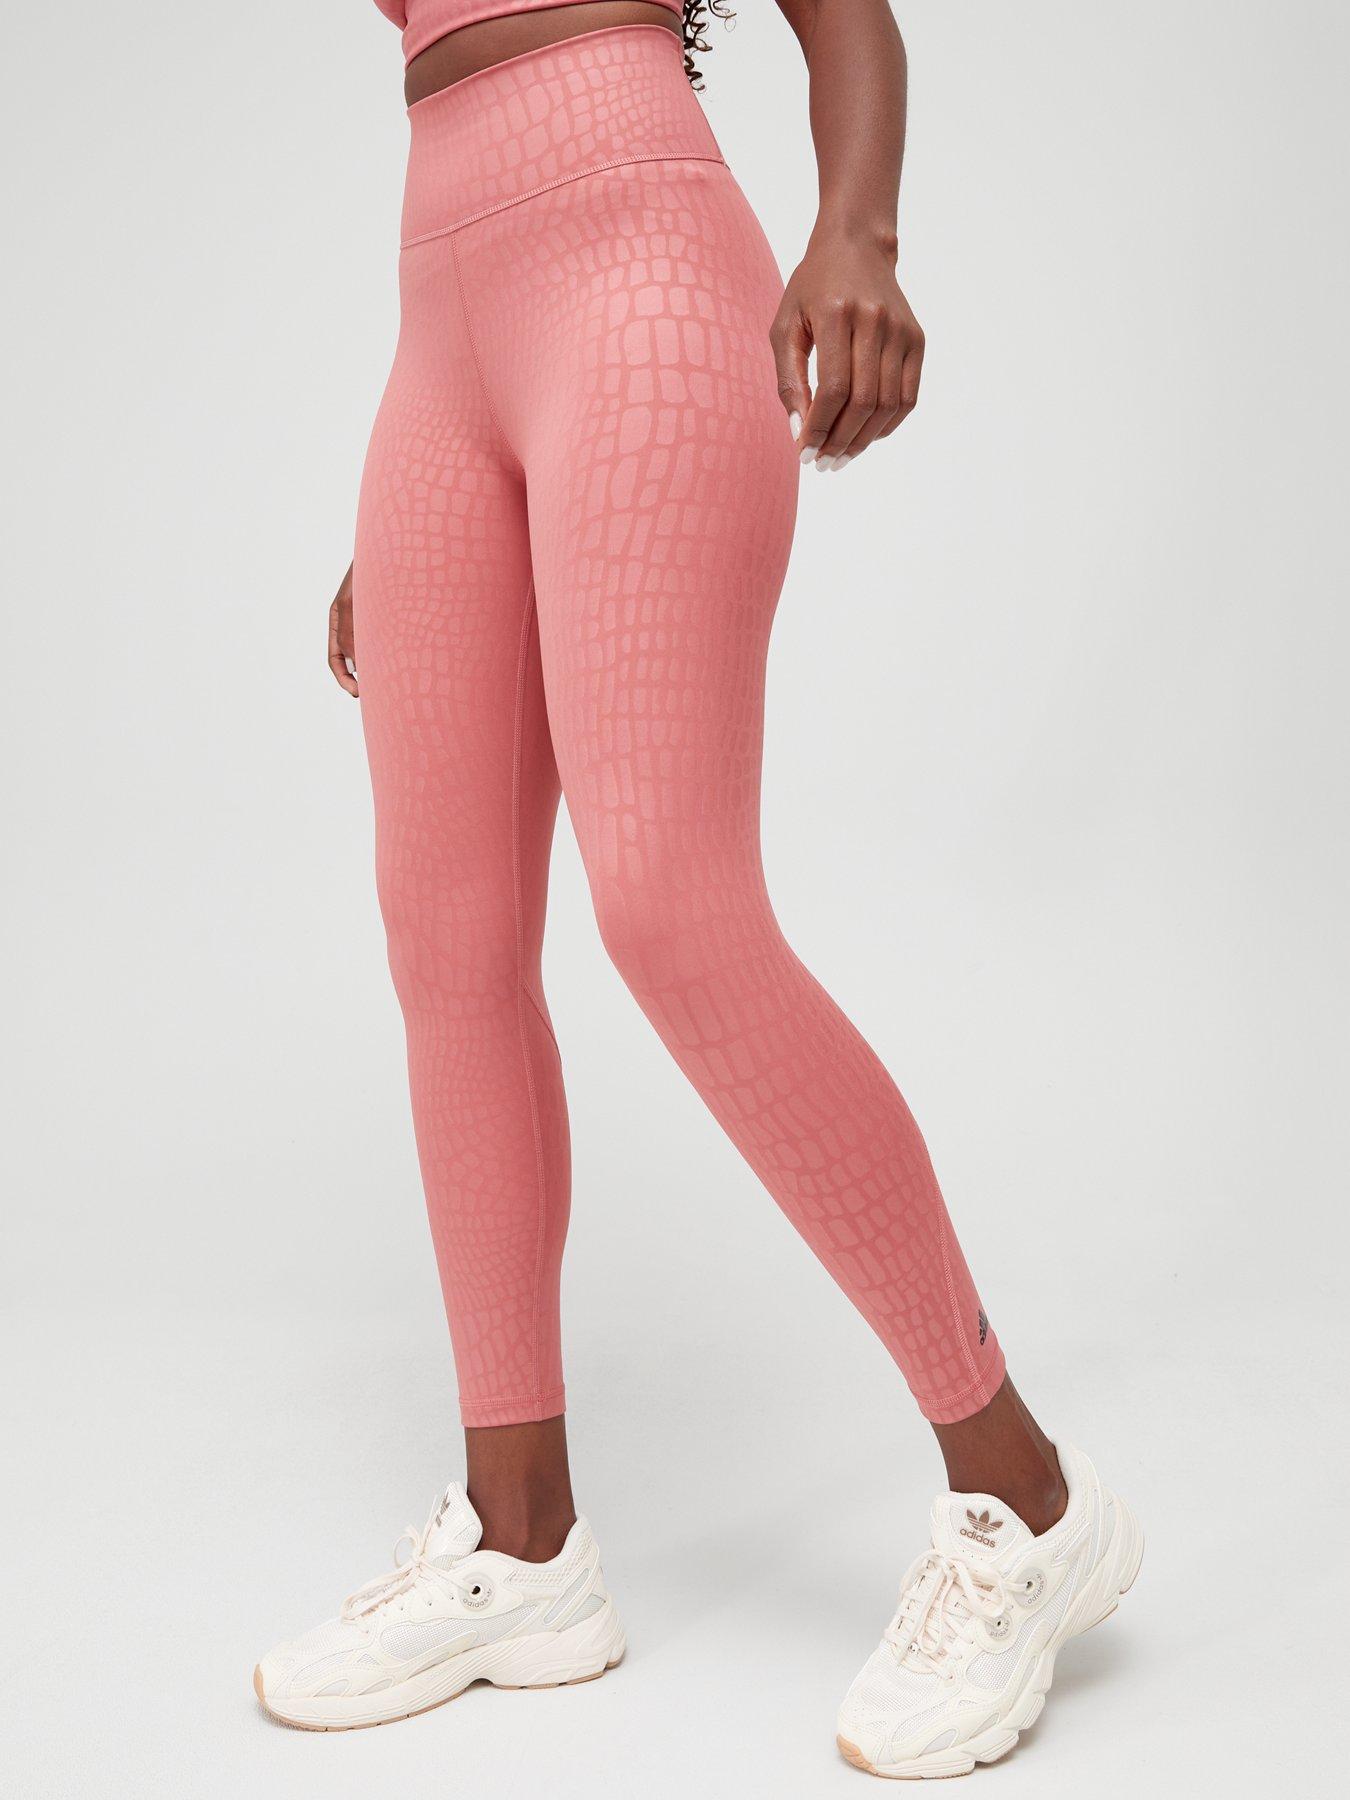 ADIDAS Women's pants 7/8 Tight Alpha Skin Leggings Grey Neon Pink GC8222 XS  NWT